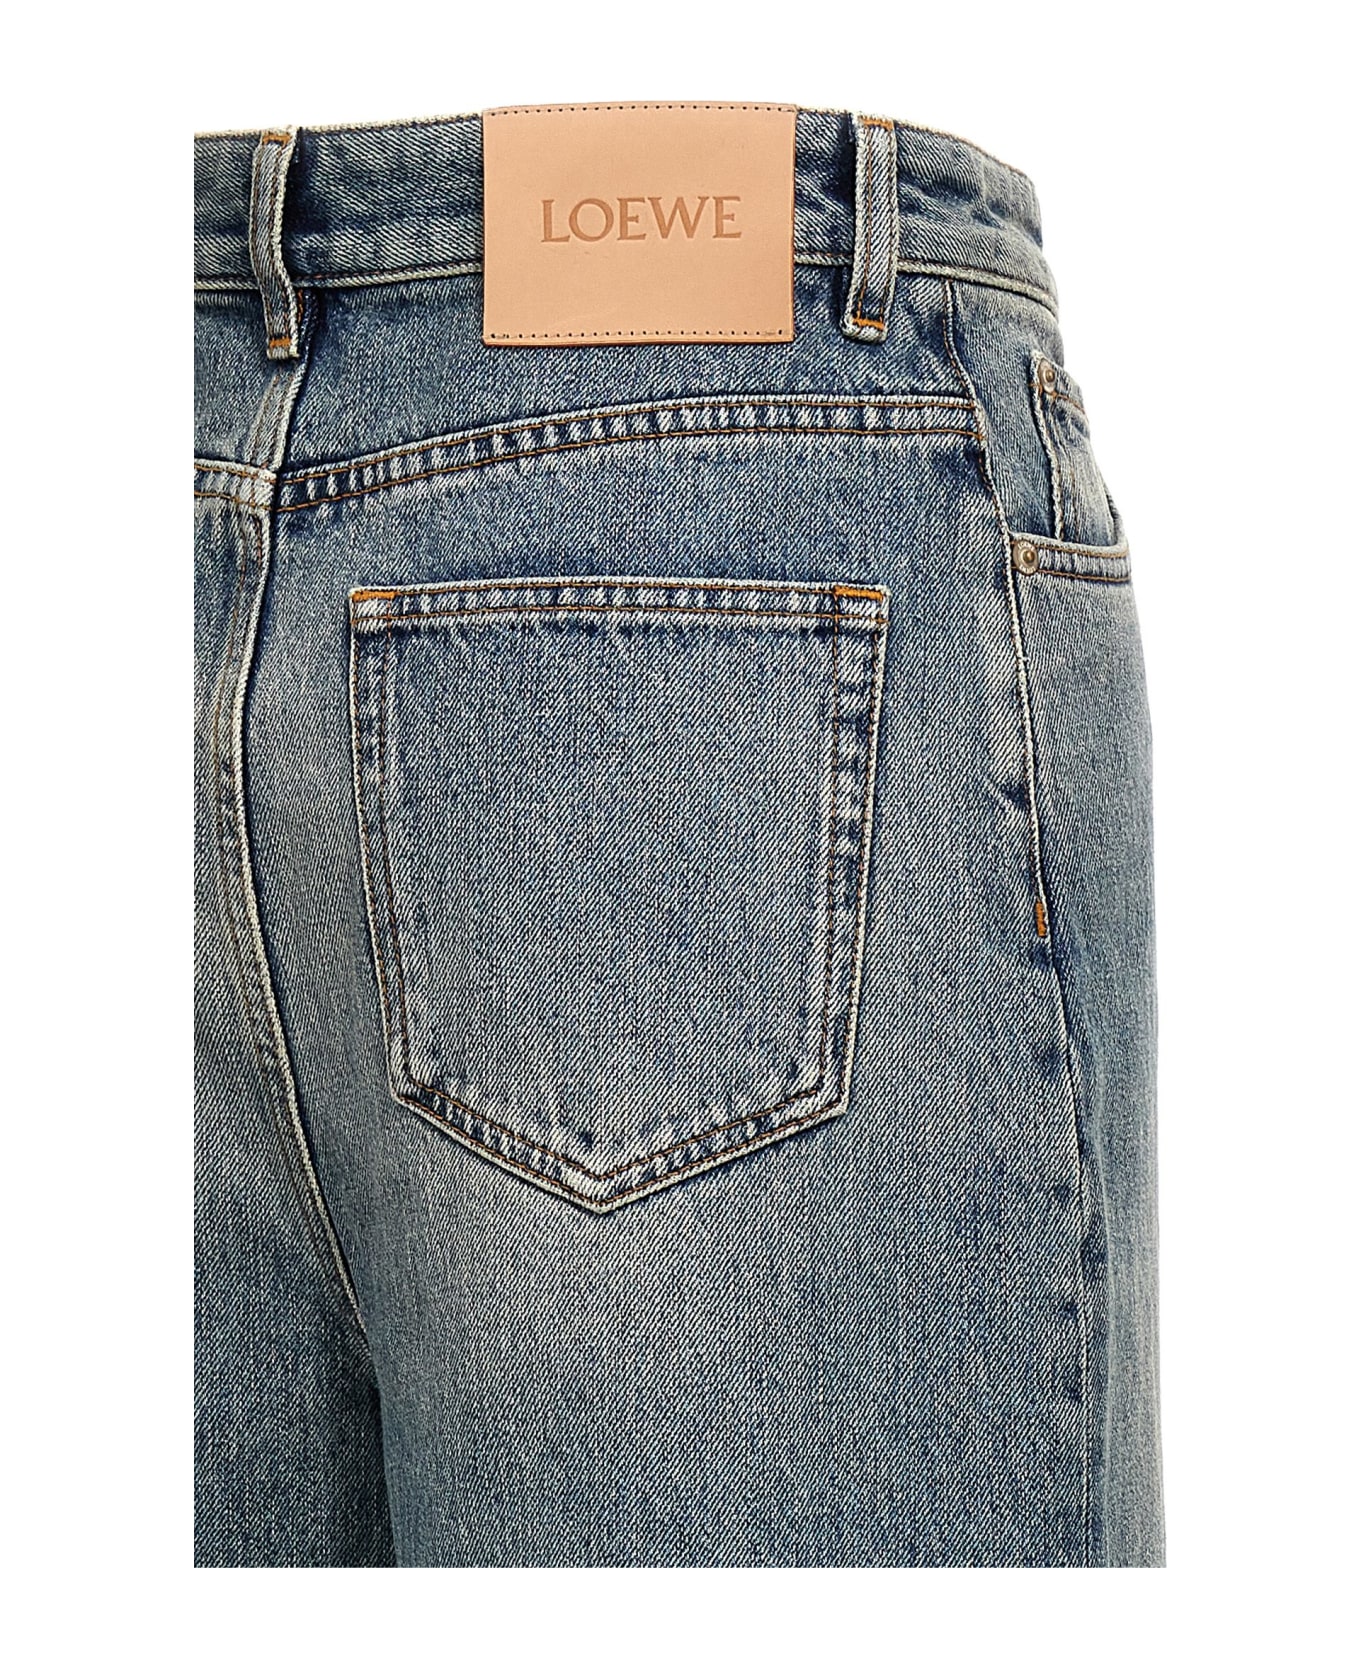 Loewe Denim Jeans - Light Blue デニム